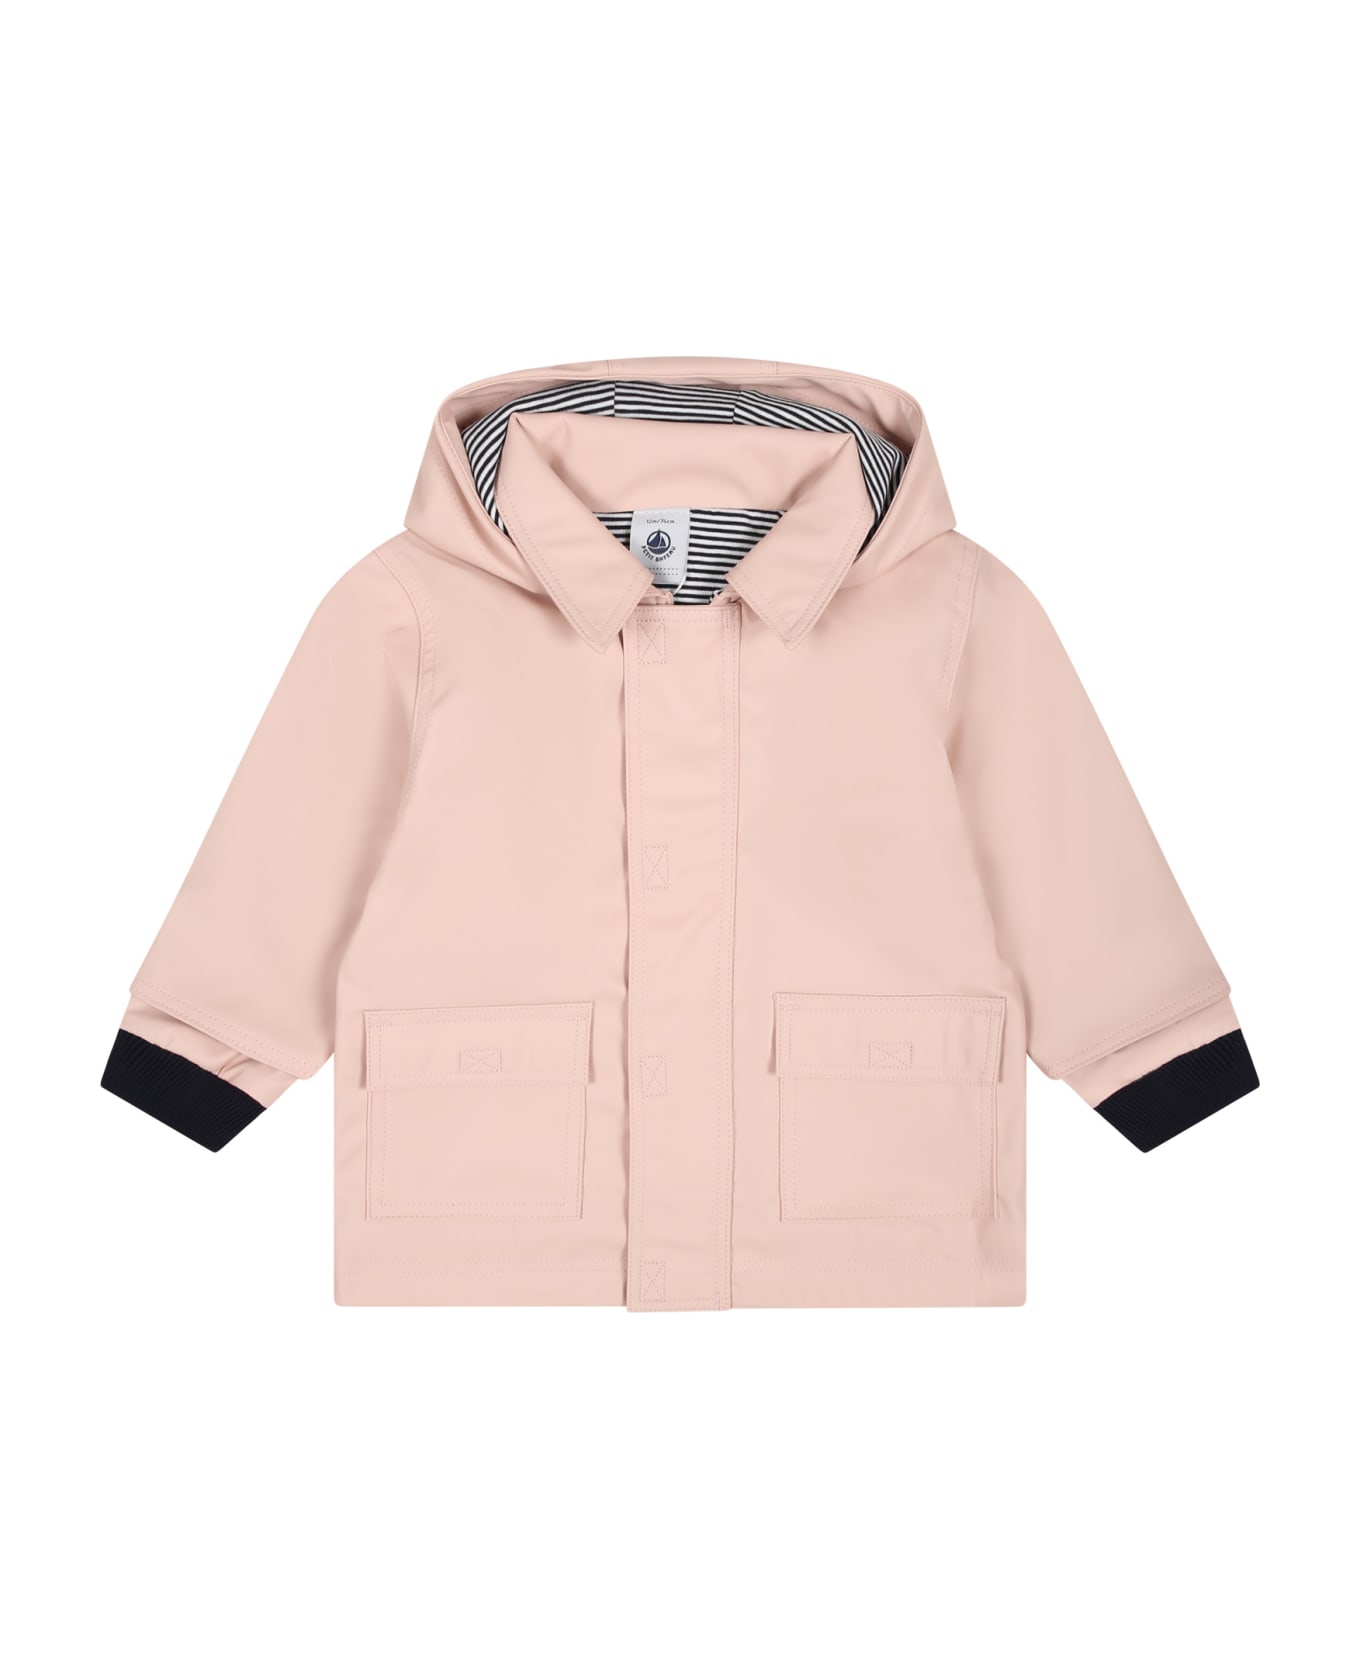 Petit Bateau Pink Raincoat For Baby Girl - Pink